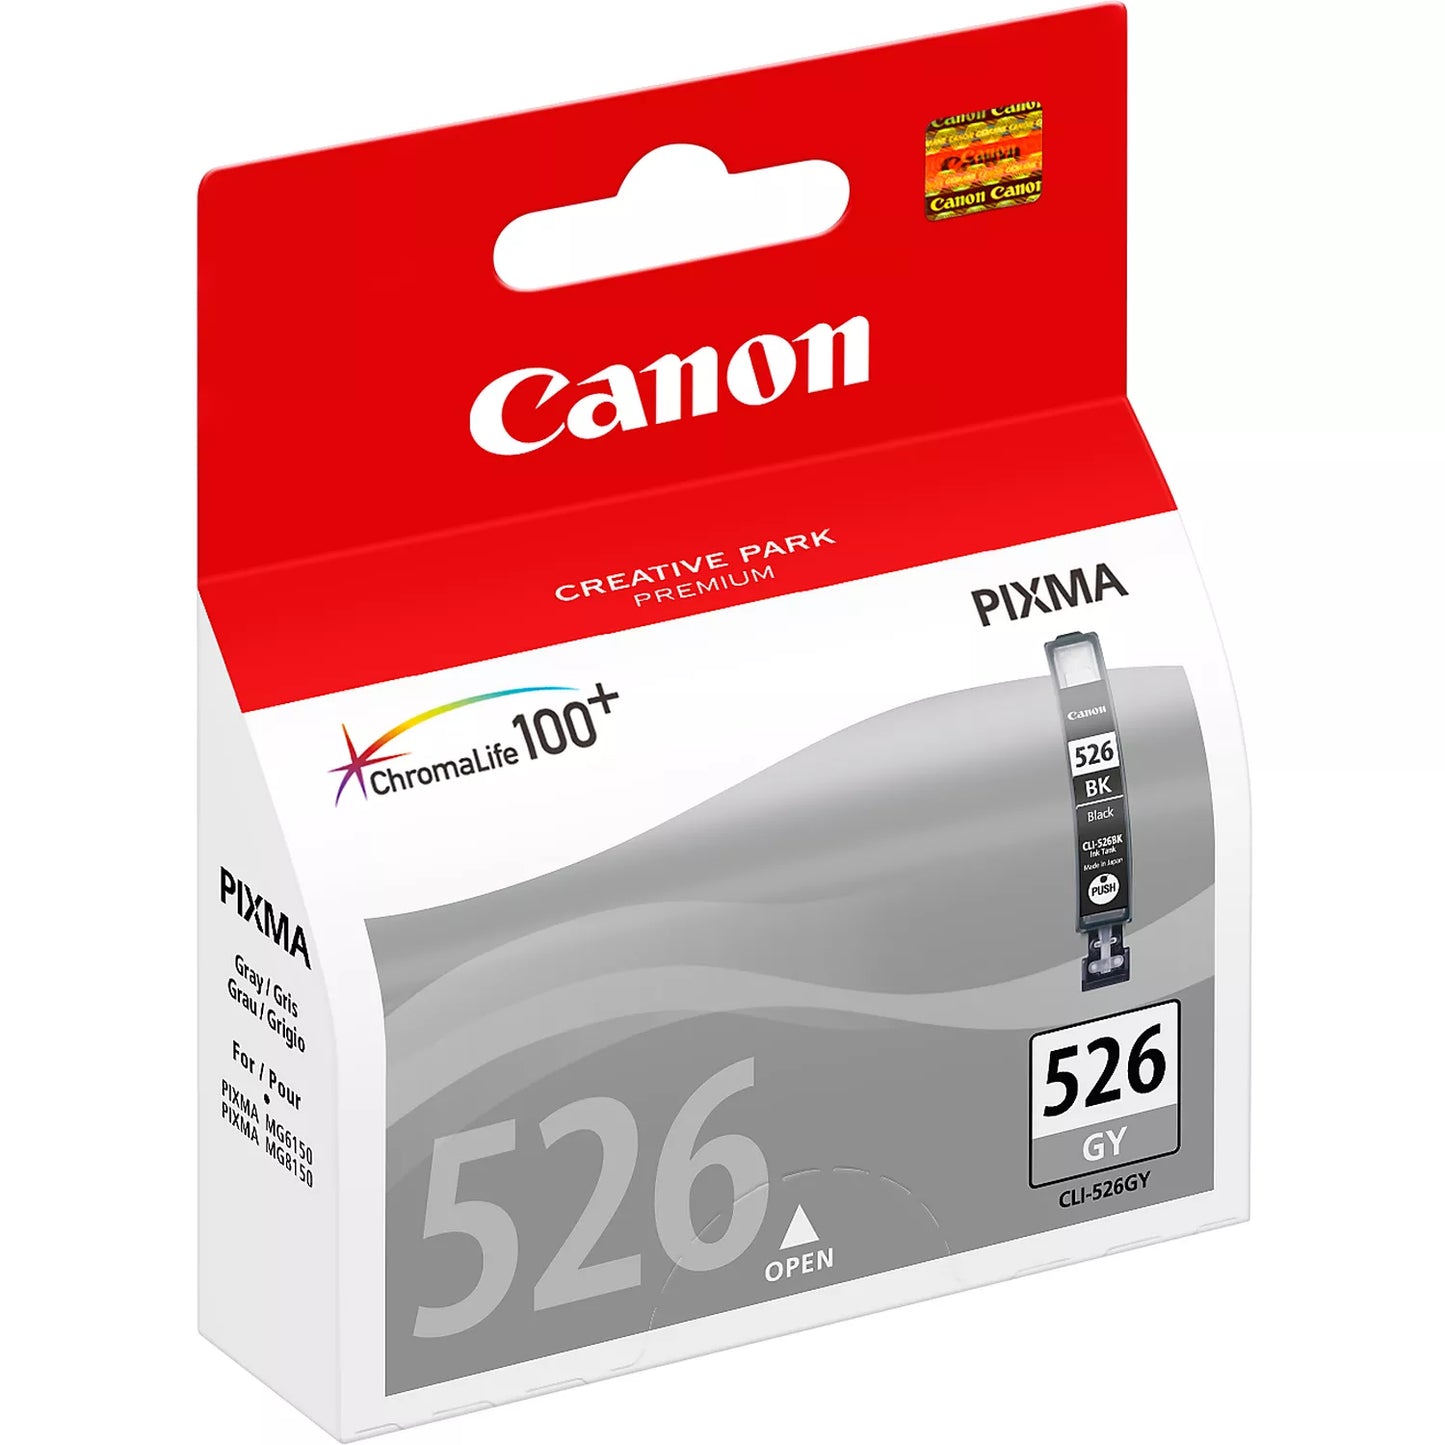 Canon CLI-526GY Ink Cartridge | PIXMA | Grey